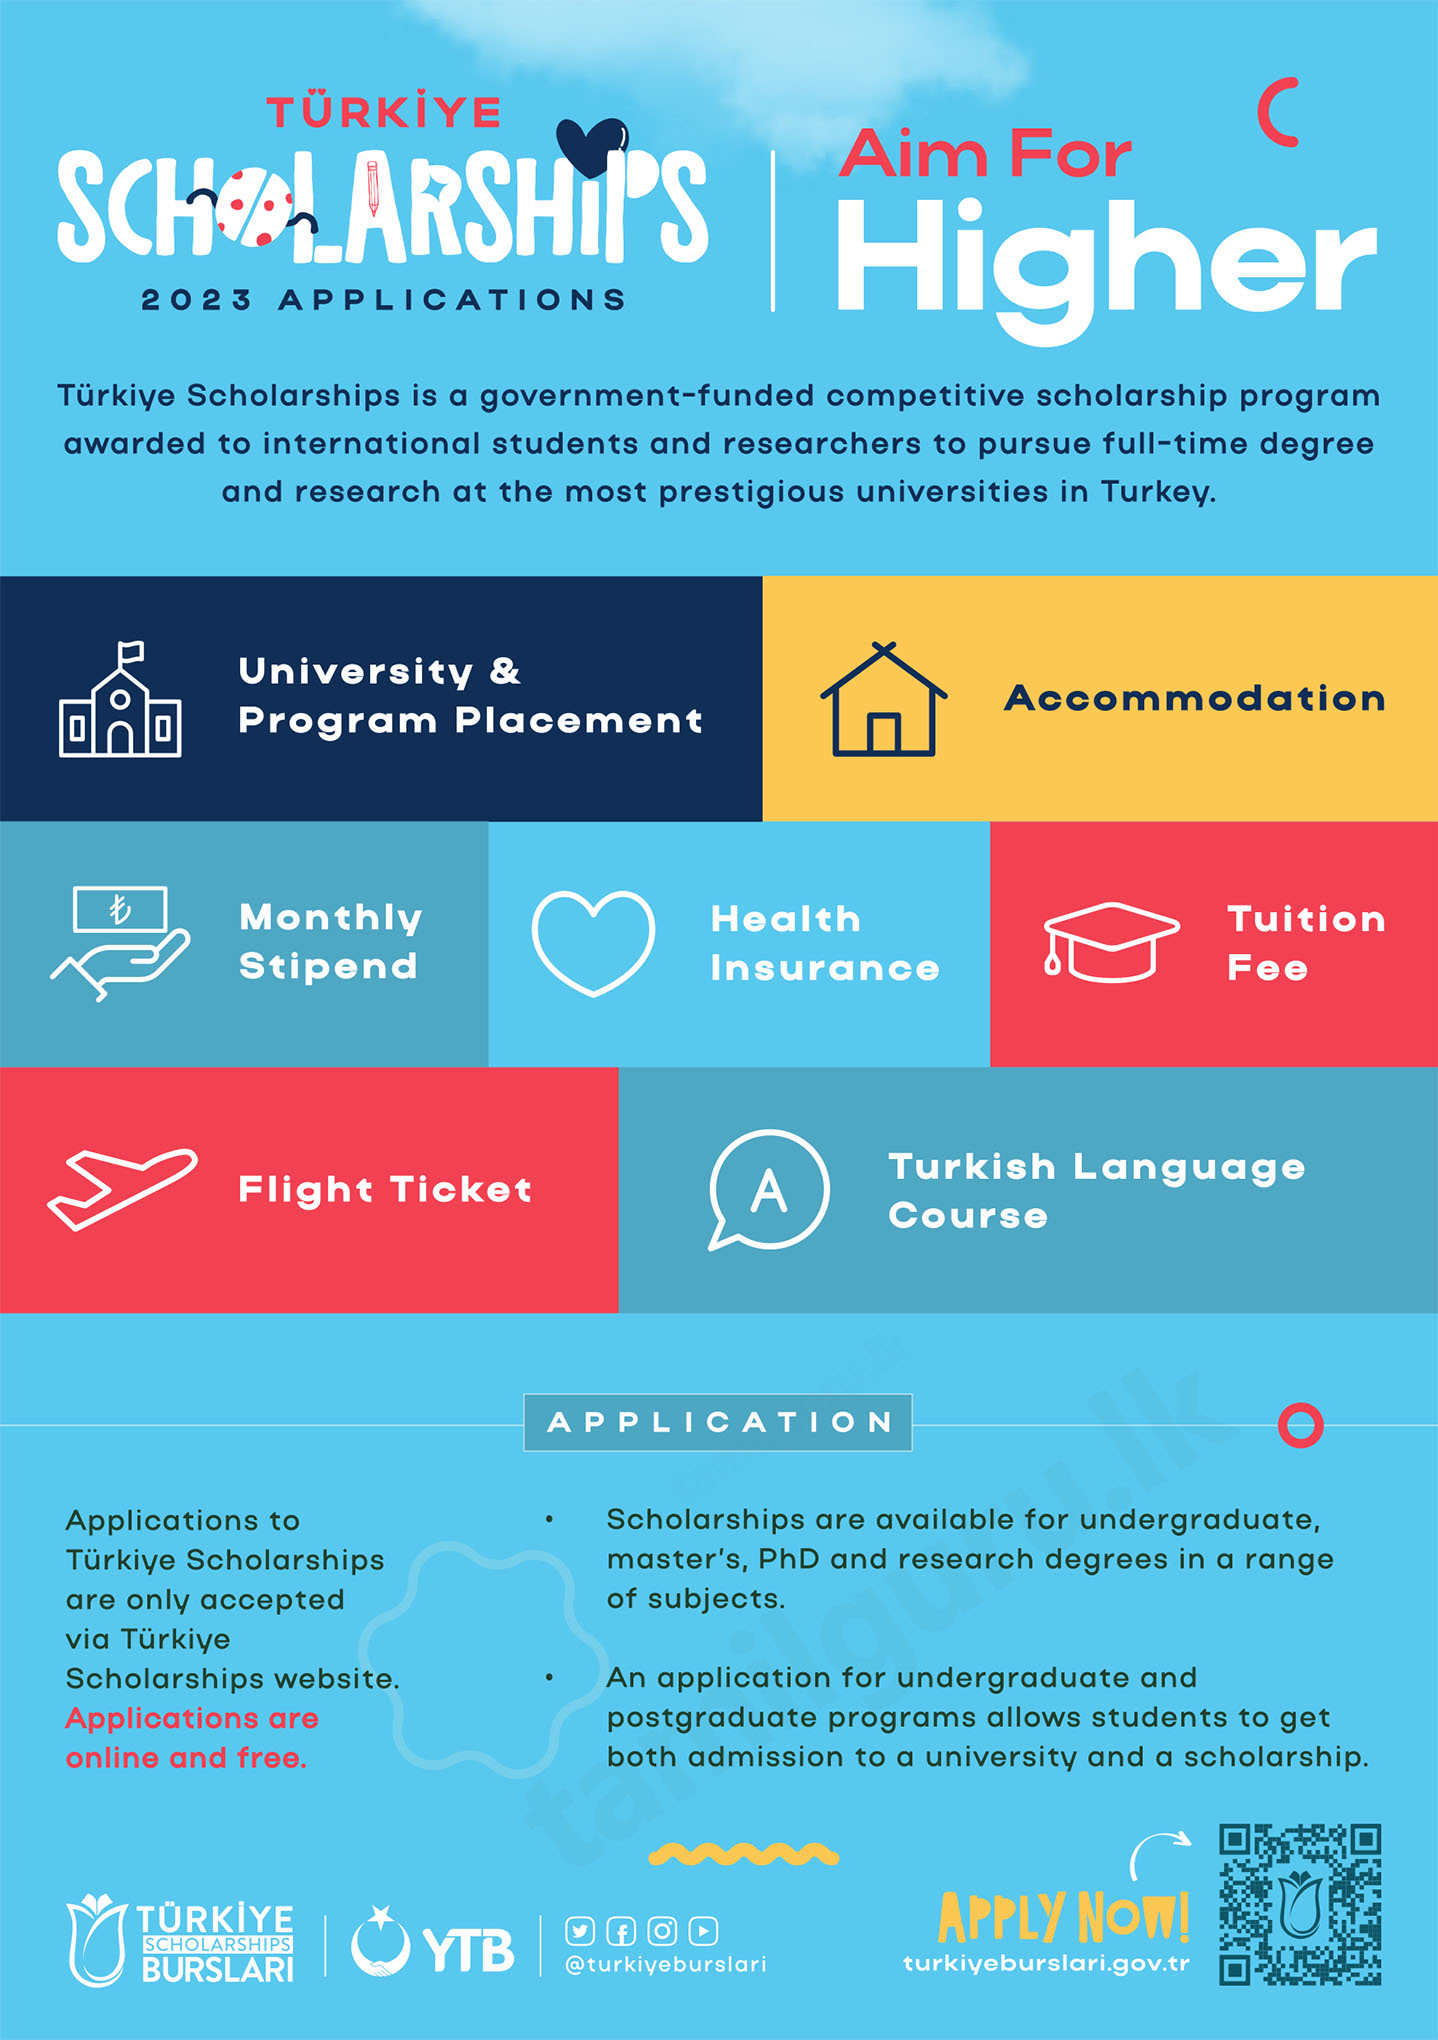 Turkey Scholarships for Sri Lankan & International Students - 2023